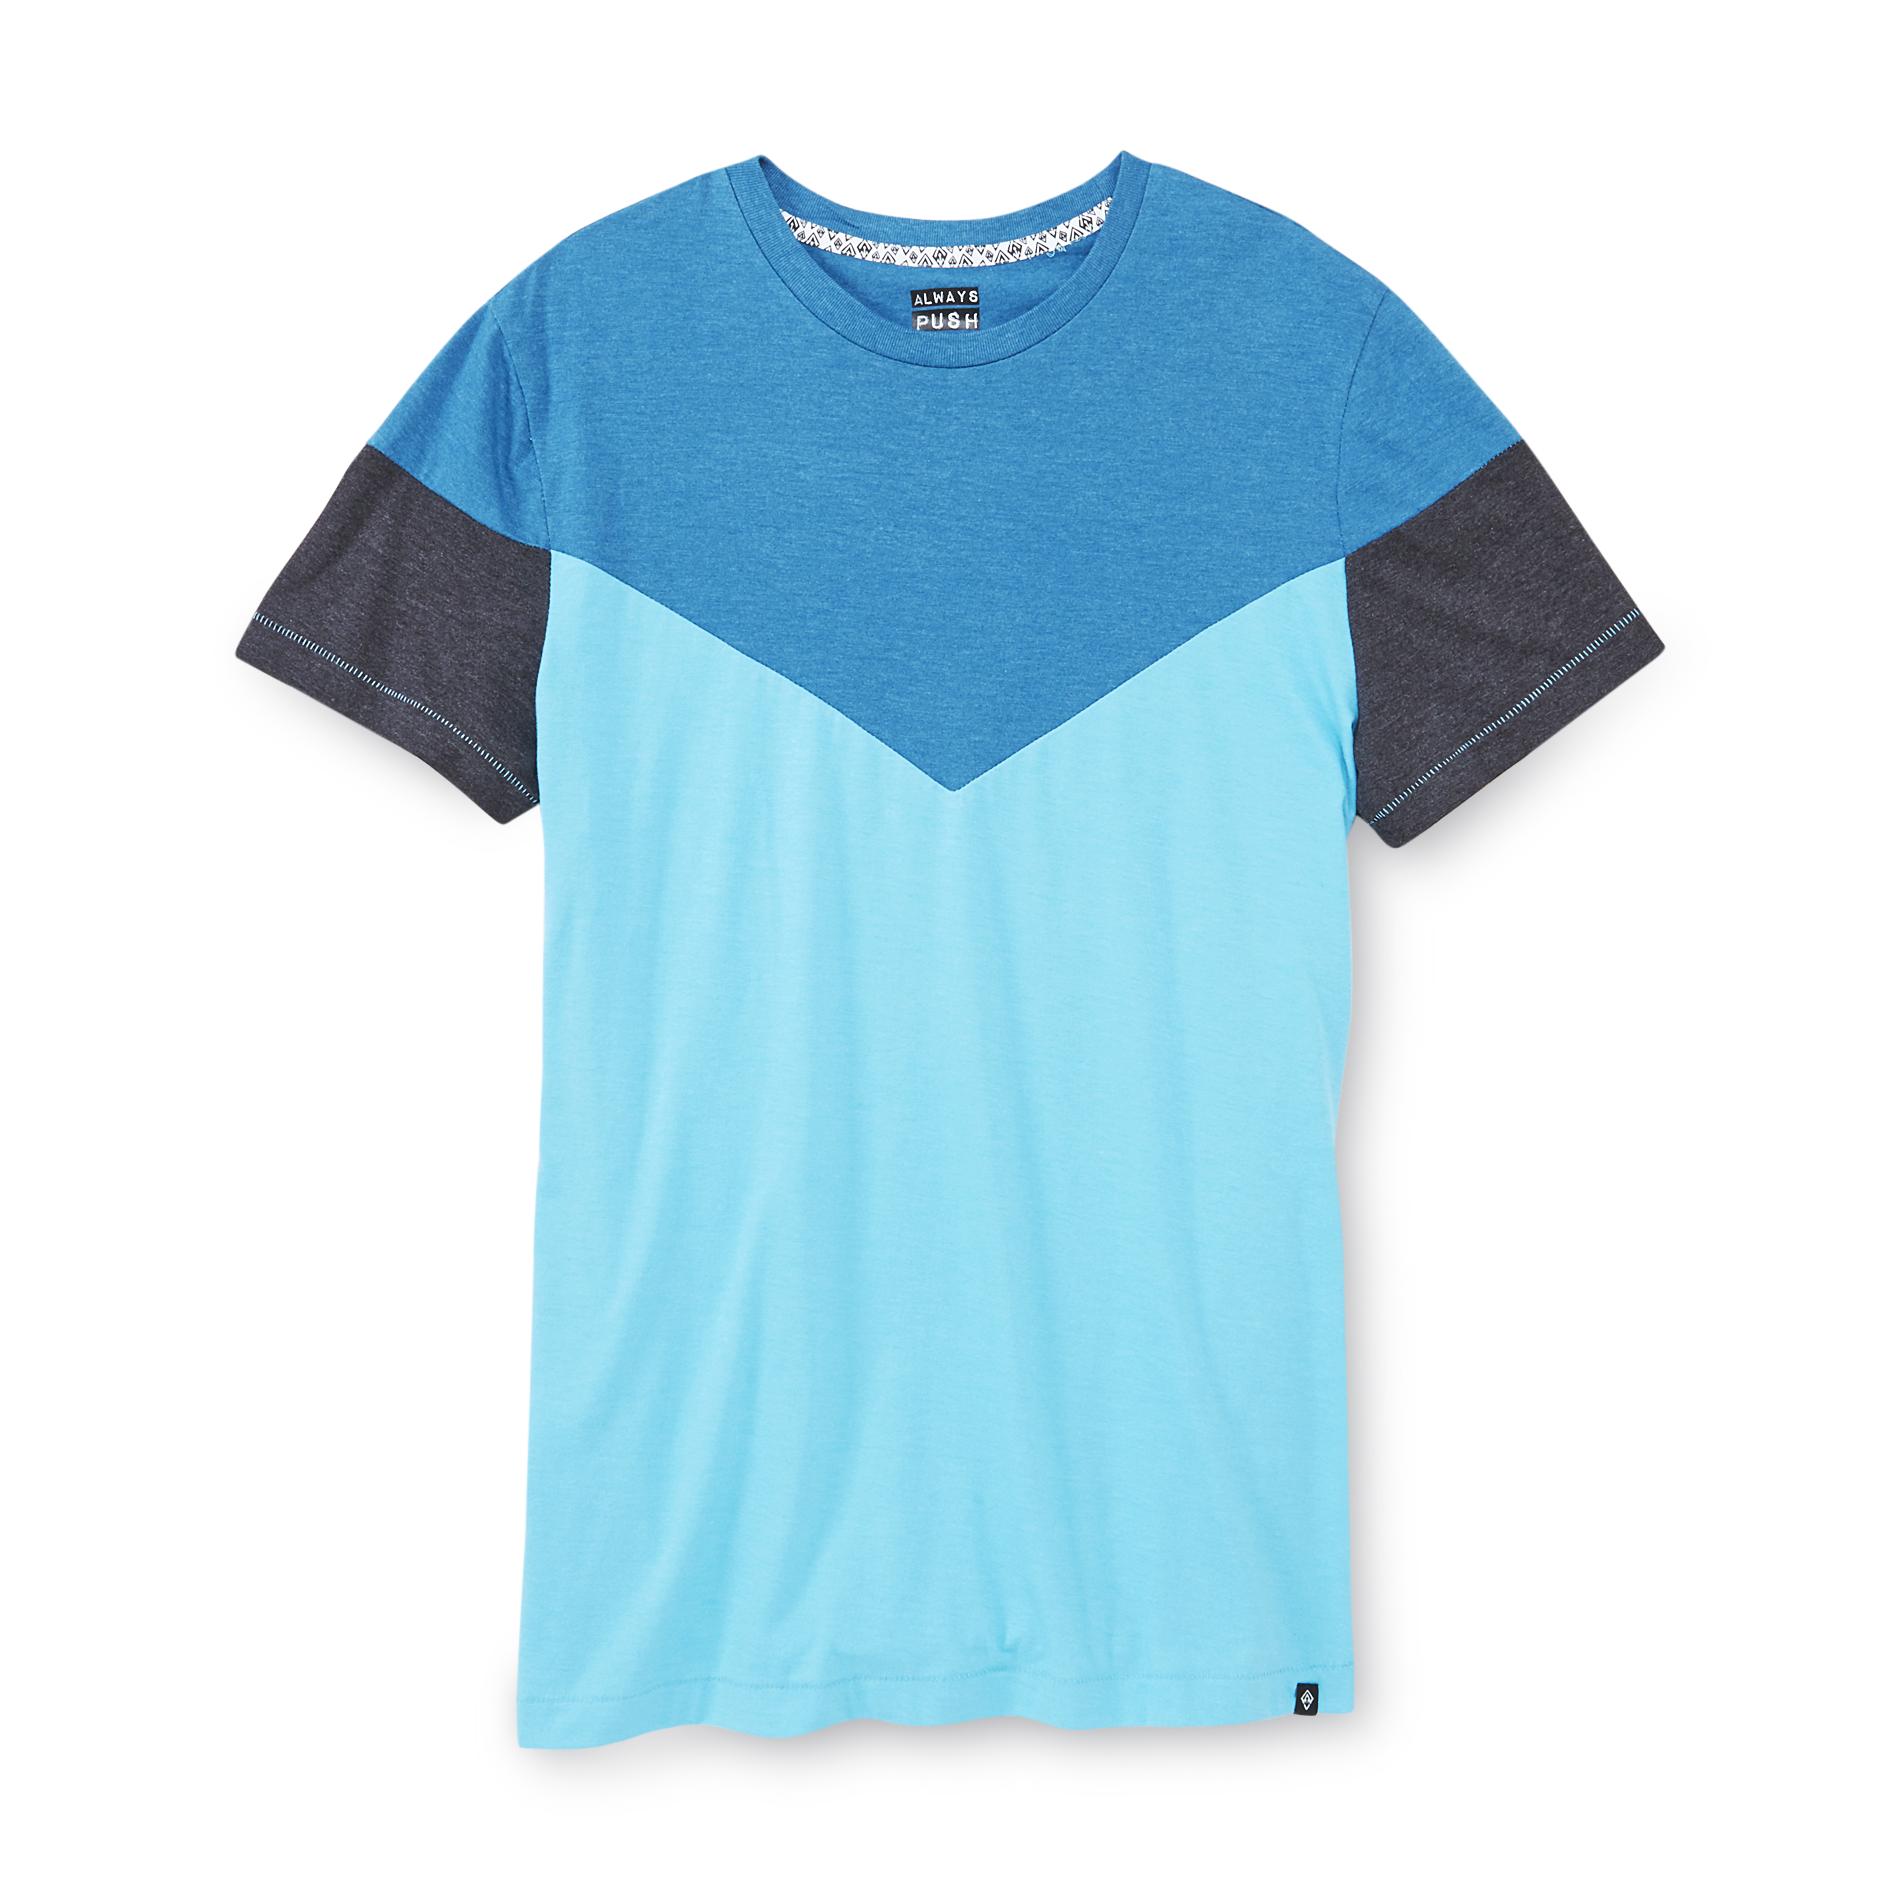 Always Push Forward Men's Seamed T-Shirt - Heathered Colorblock